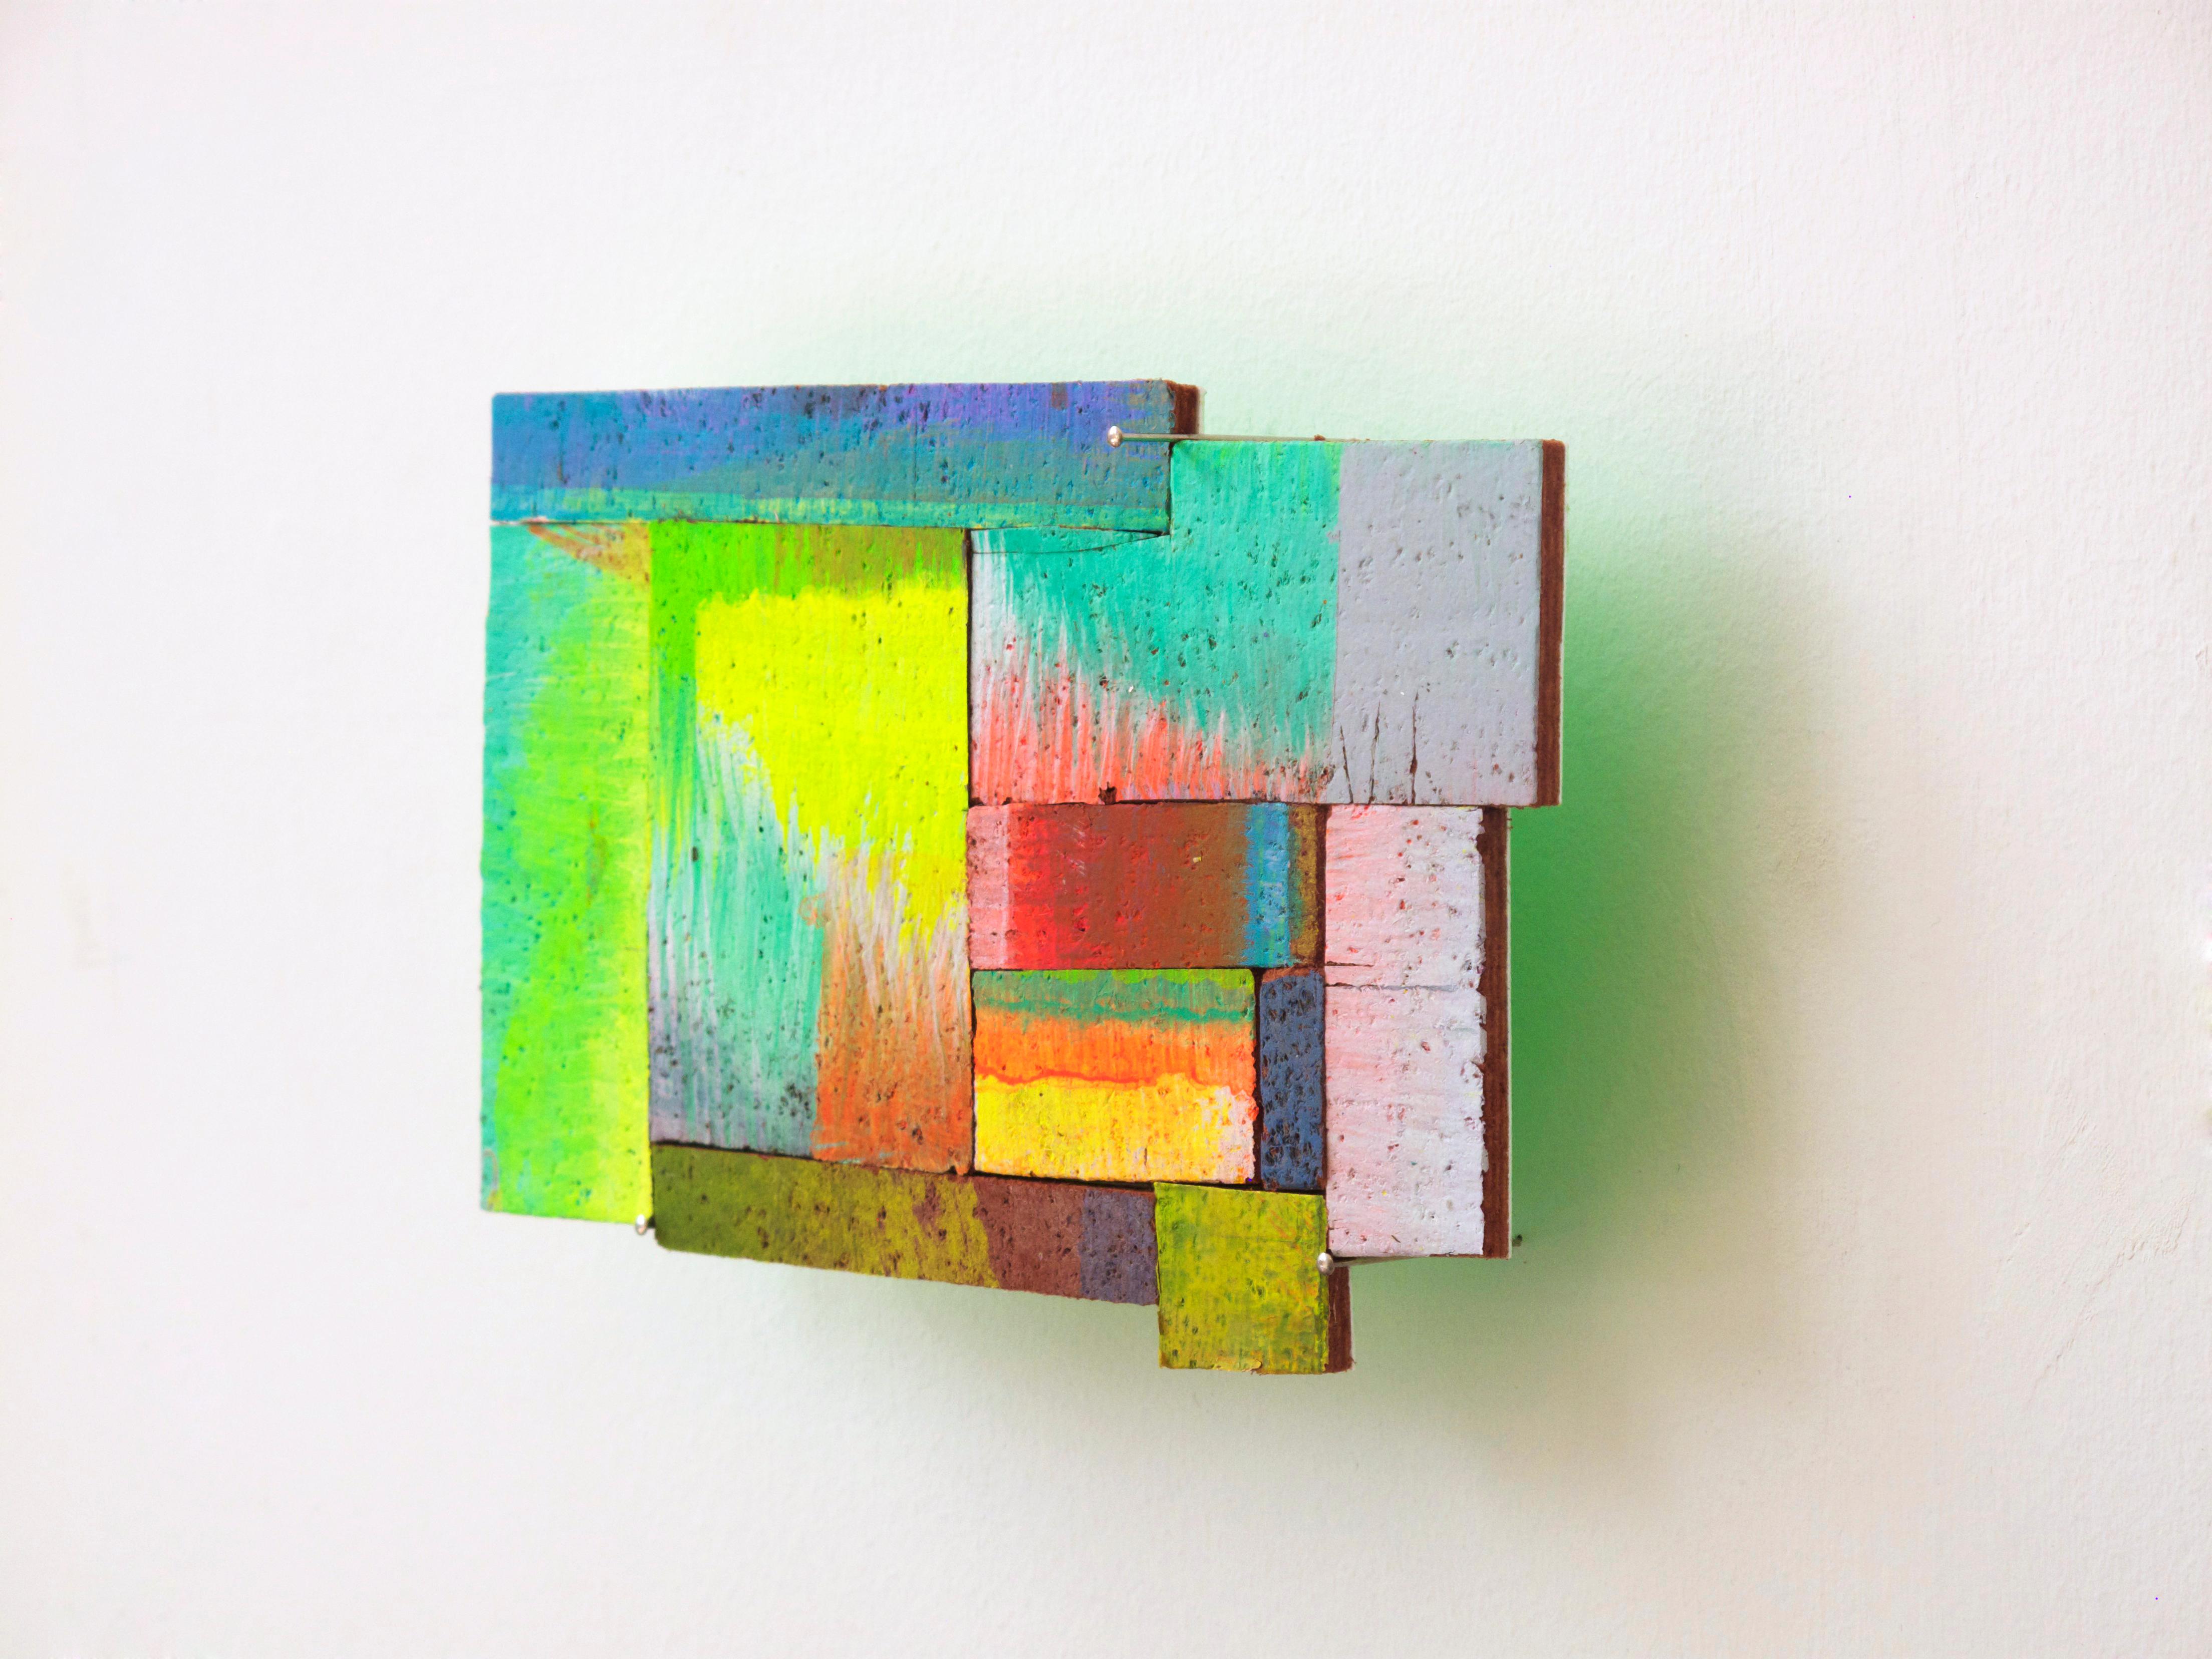 Detritus #6, multicolored abstract neon wall-sculpture, 2015